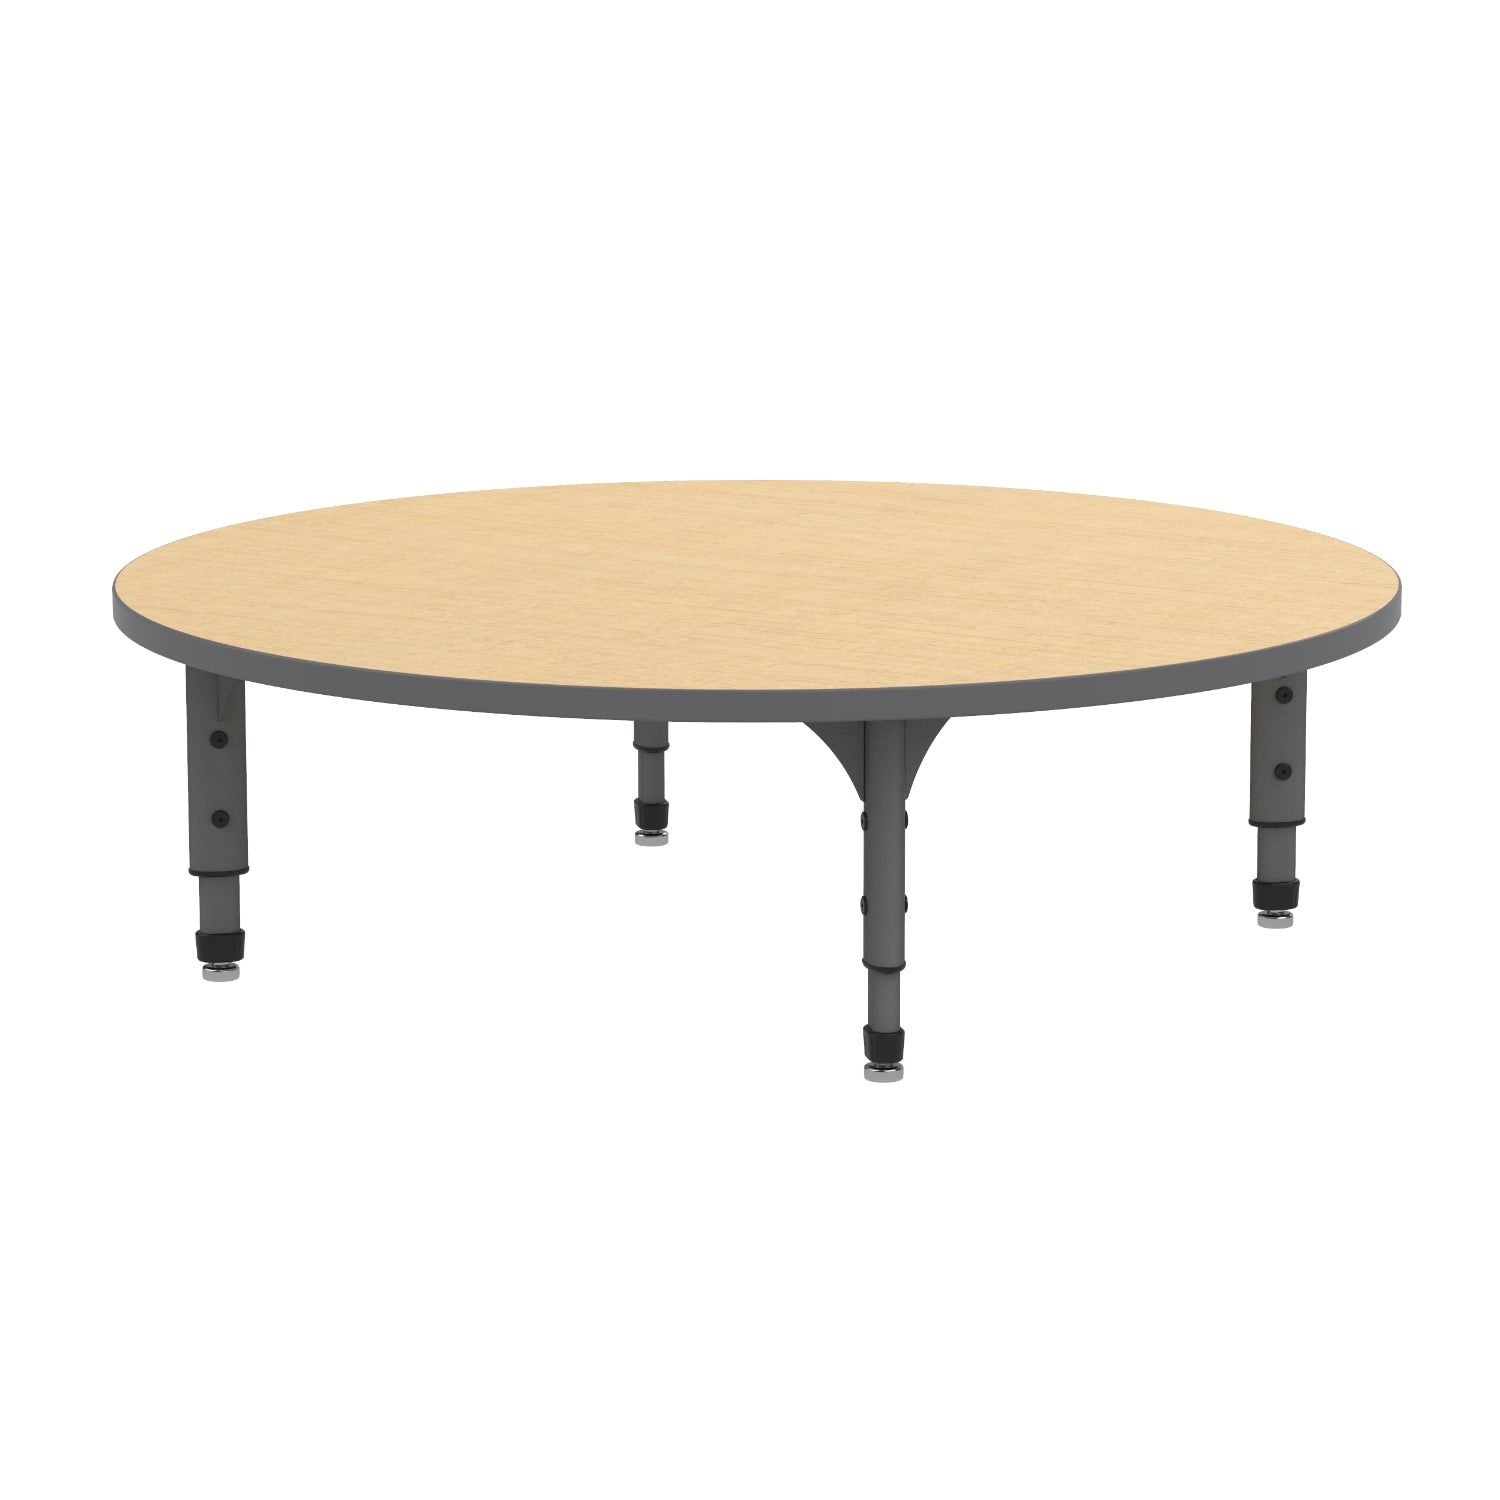 Adjustable Height Floor Activity Table, 48" Round